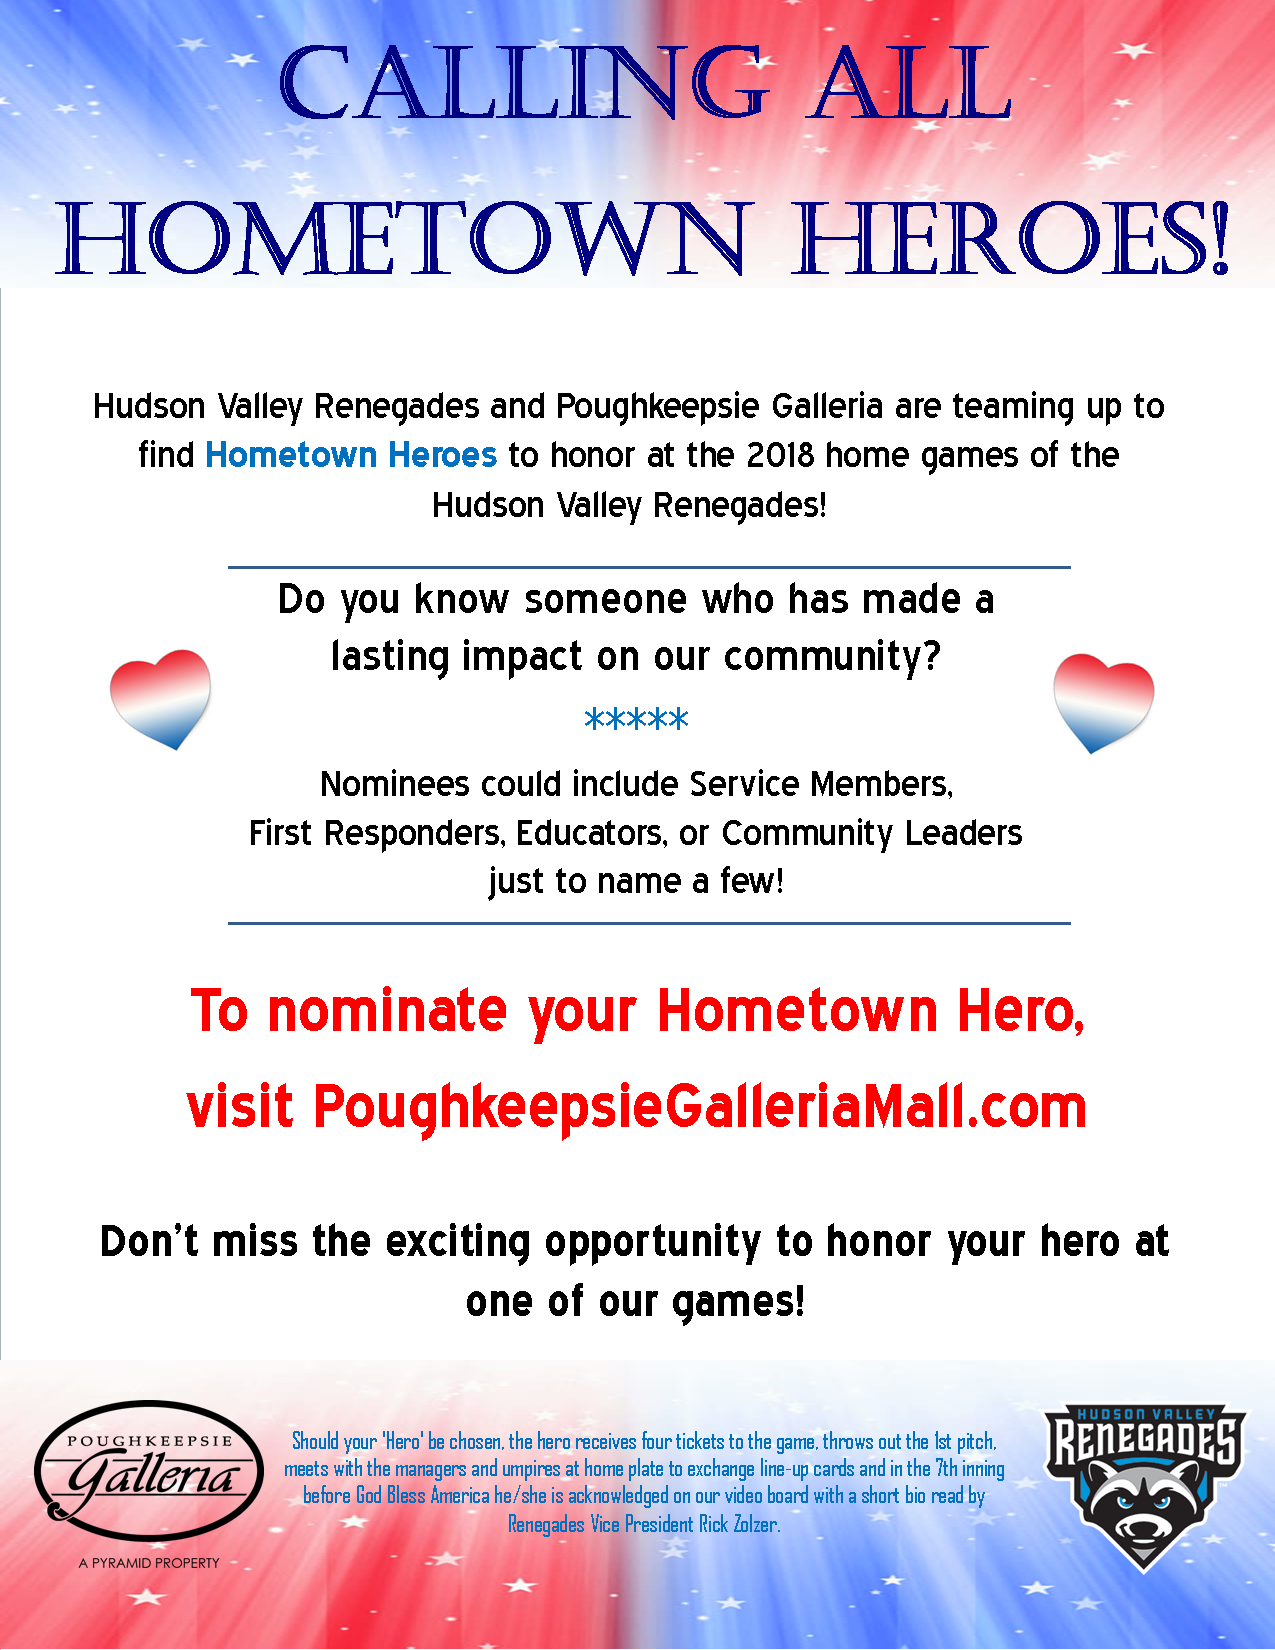 Nominate Your Hometown Hero! Poughkeepsie Galleria